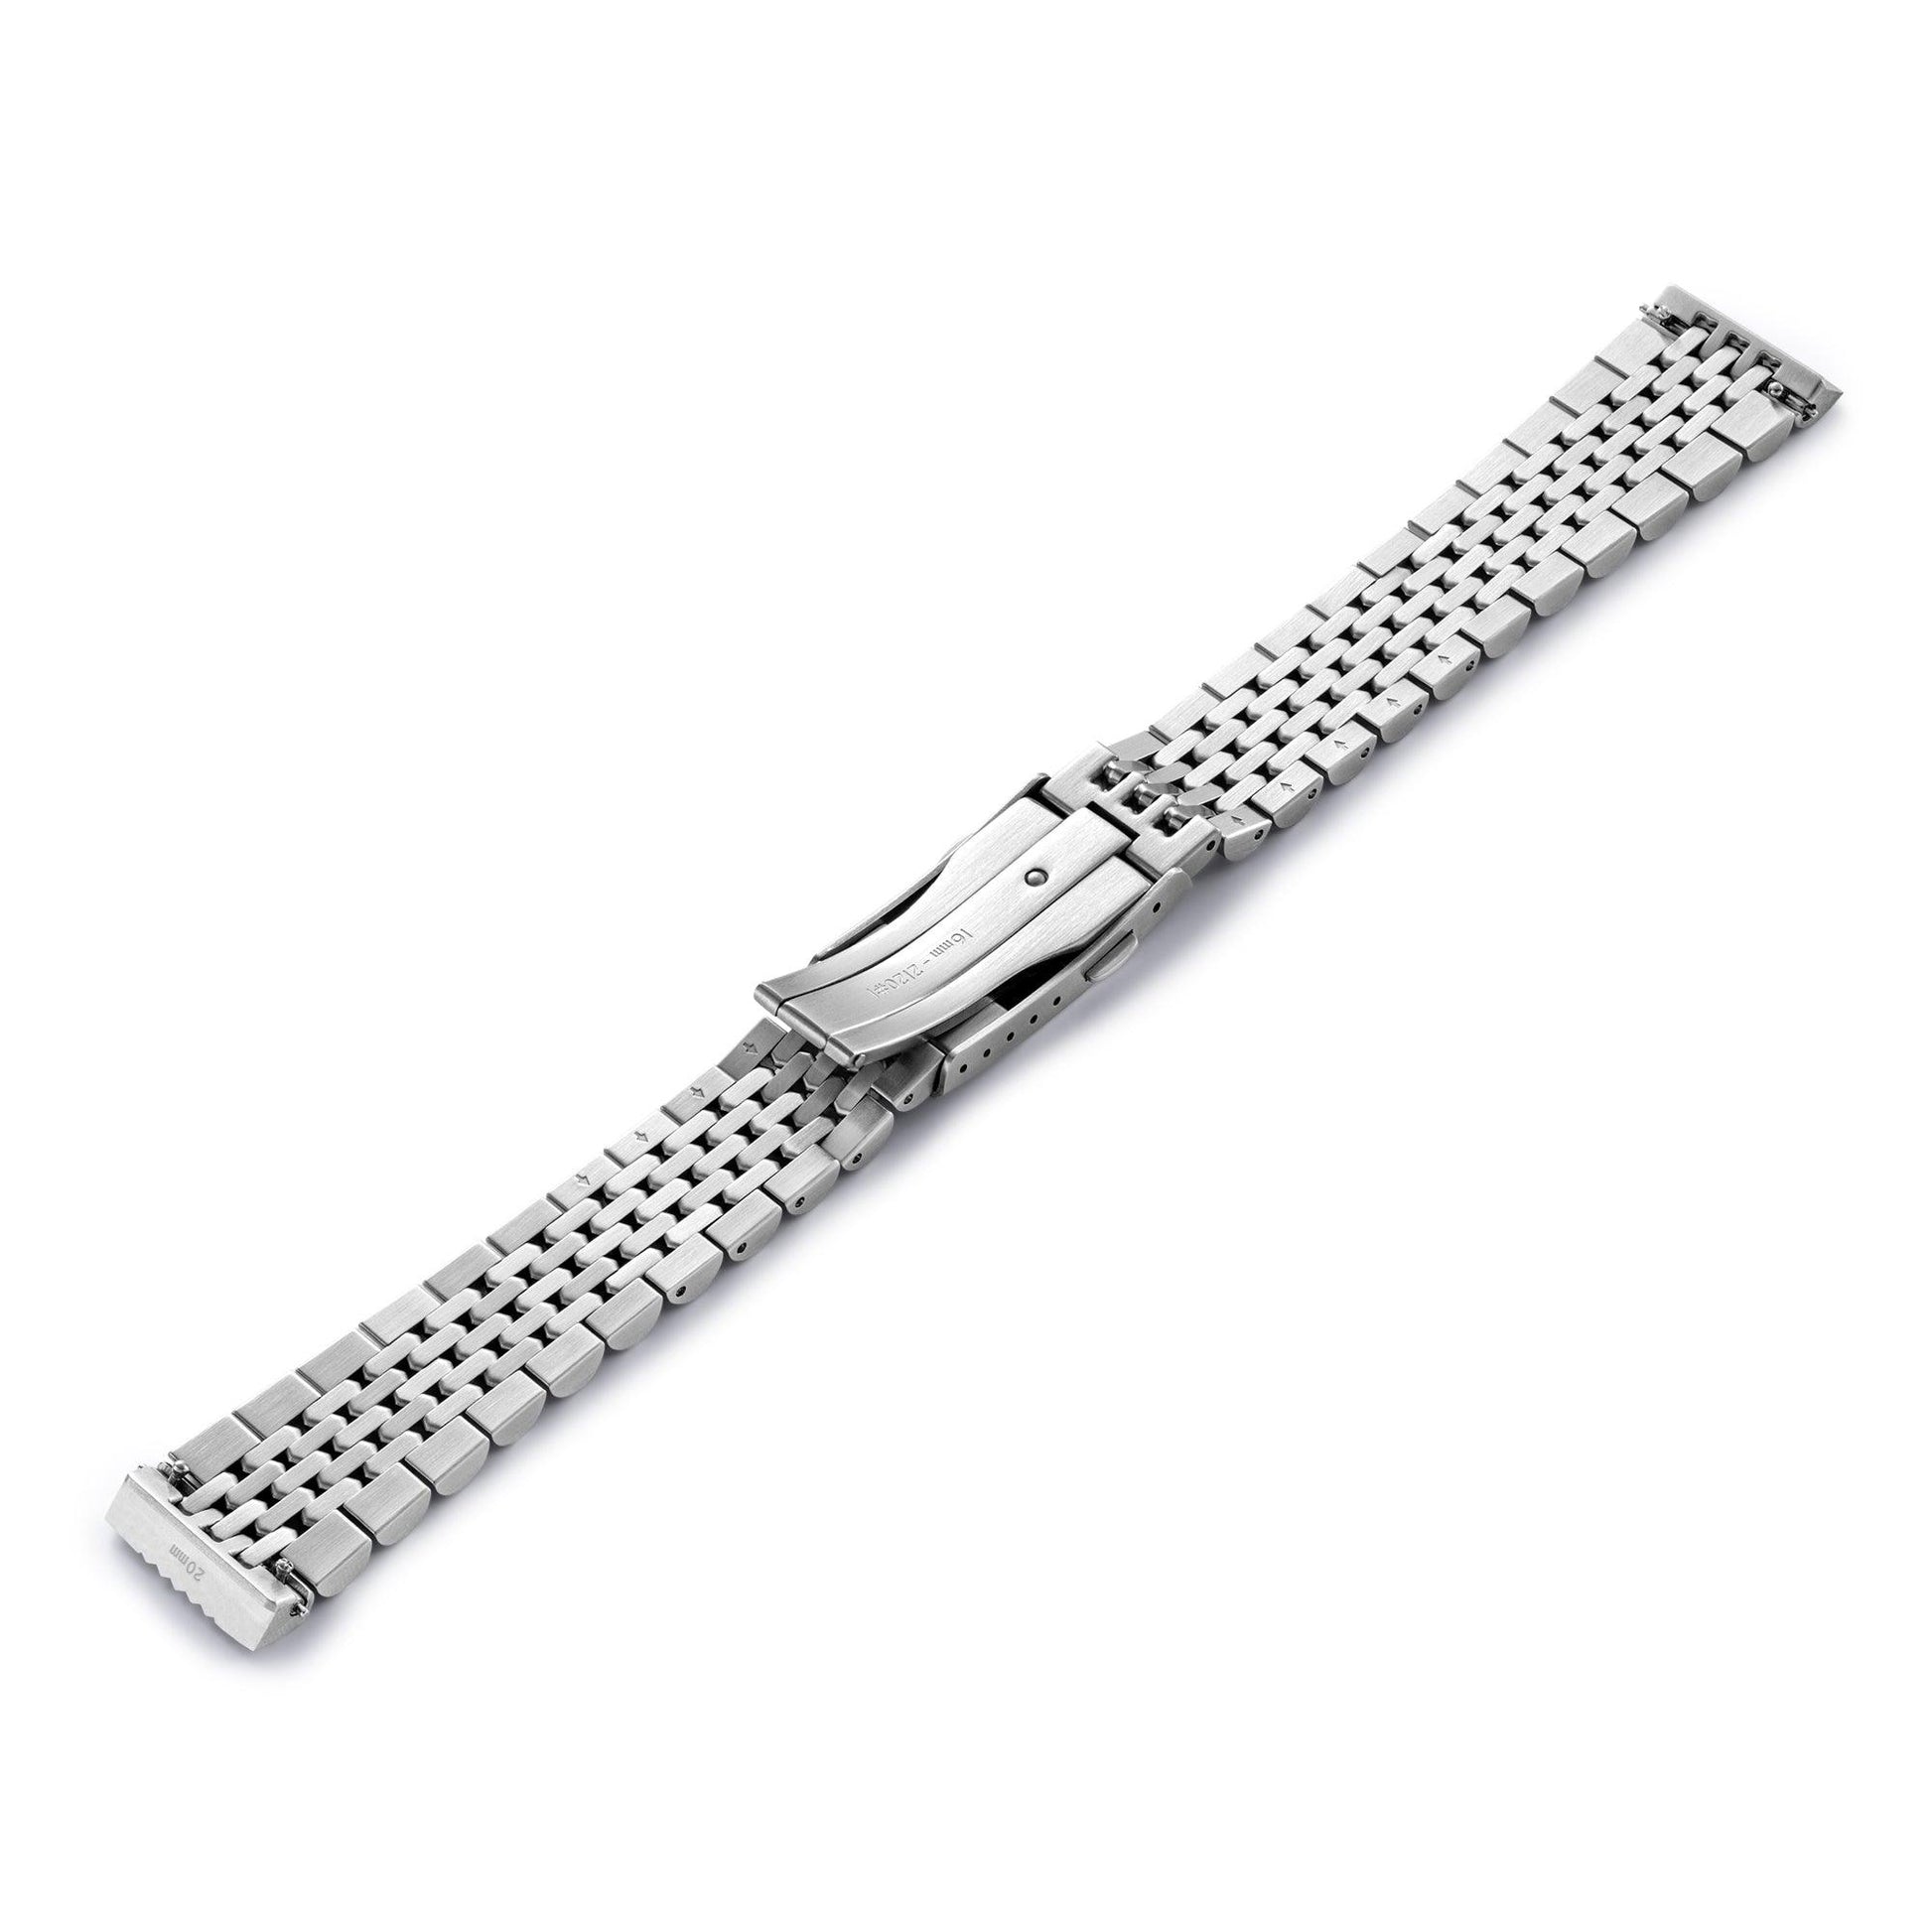 Skindiver WT Automatic Bracelet Watch - Green Bezel & Steel - Wolbrook Watches